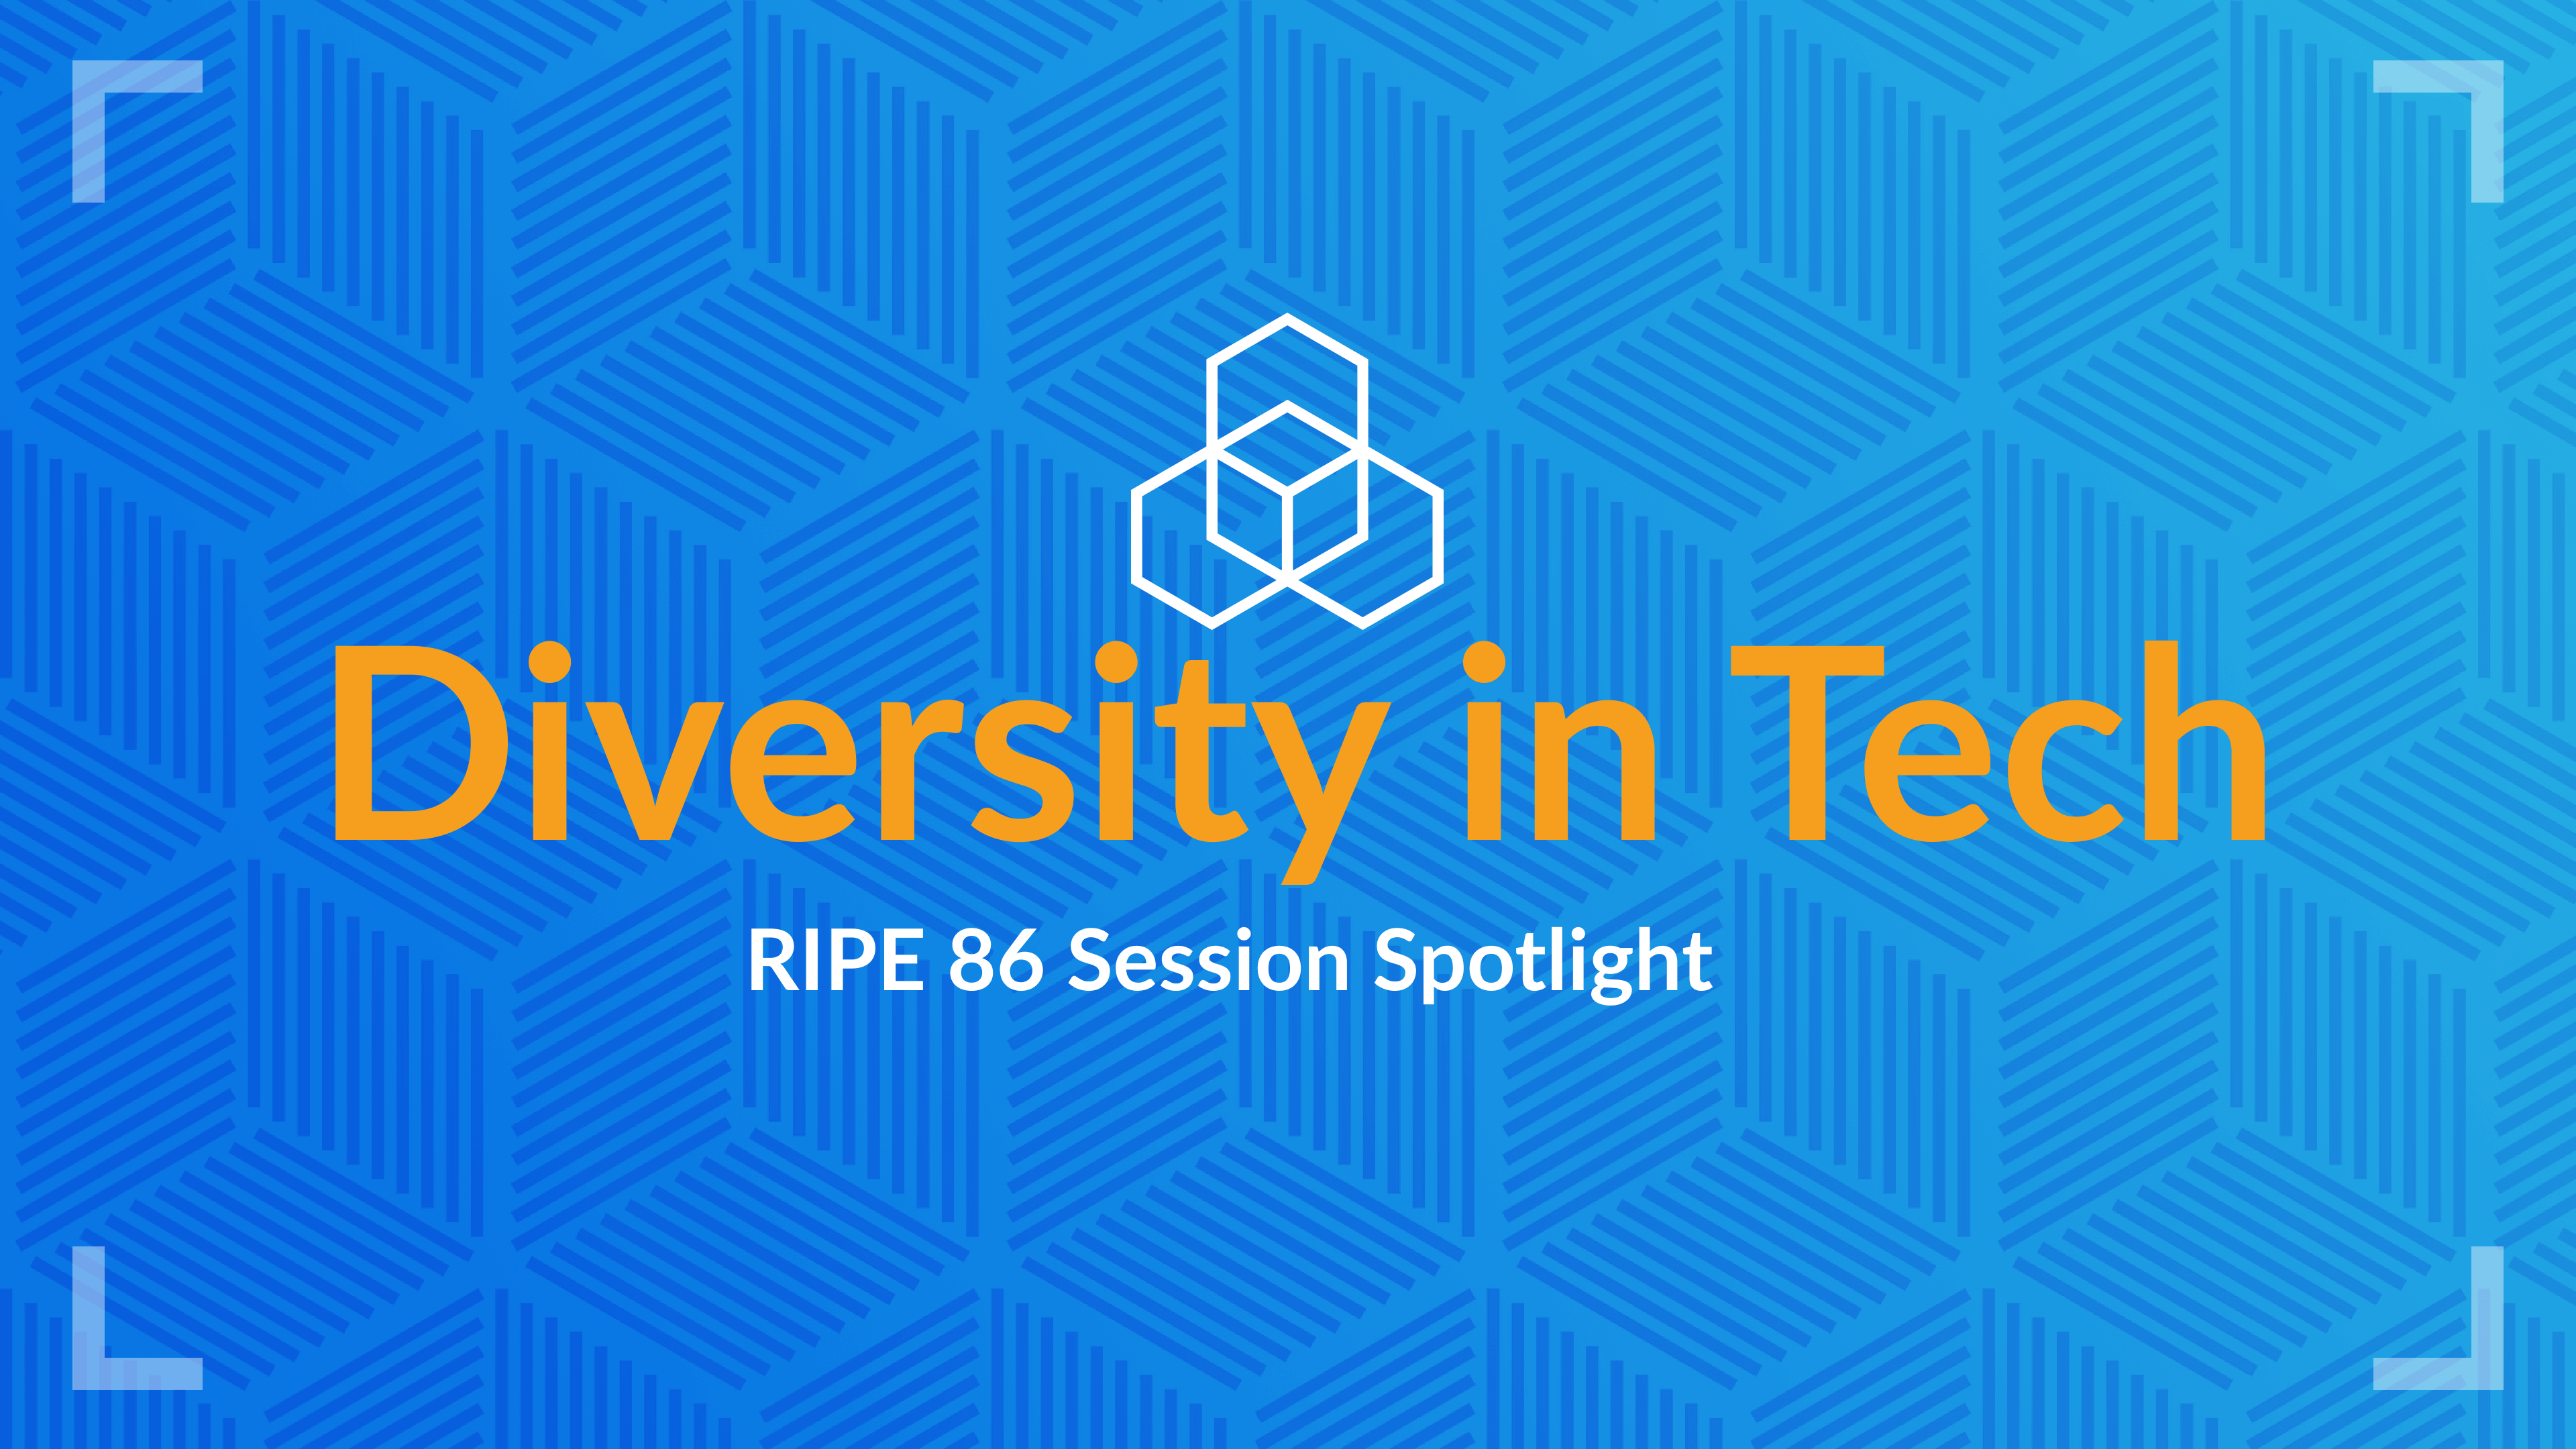 Diversity Hiring in Tech Session @ RIPE recap